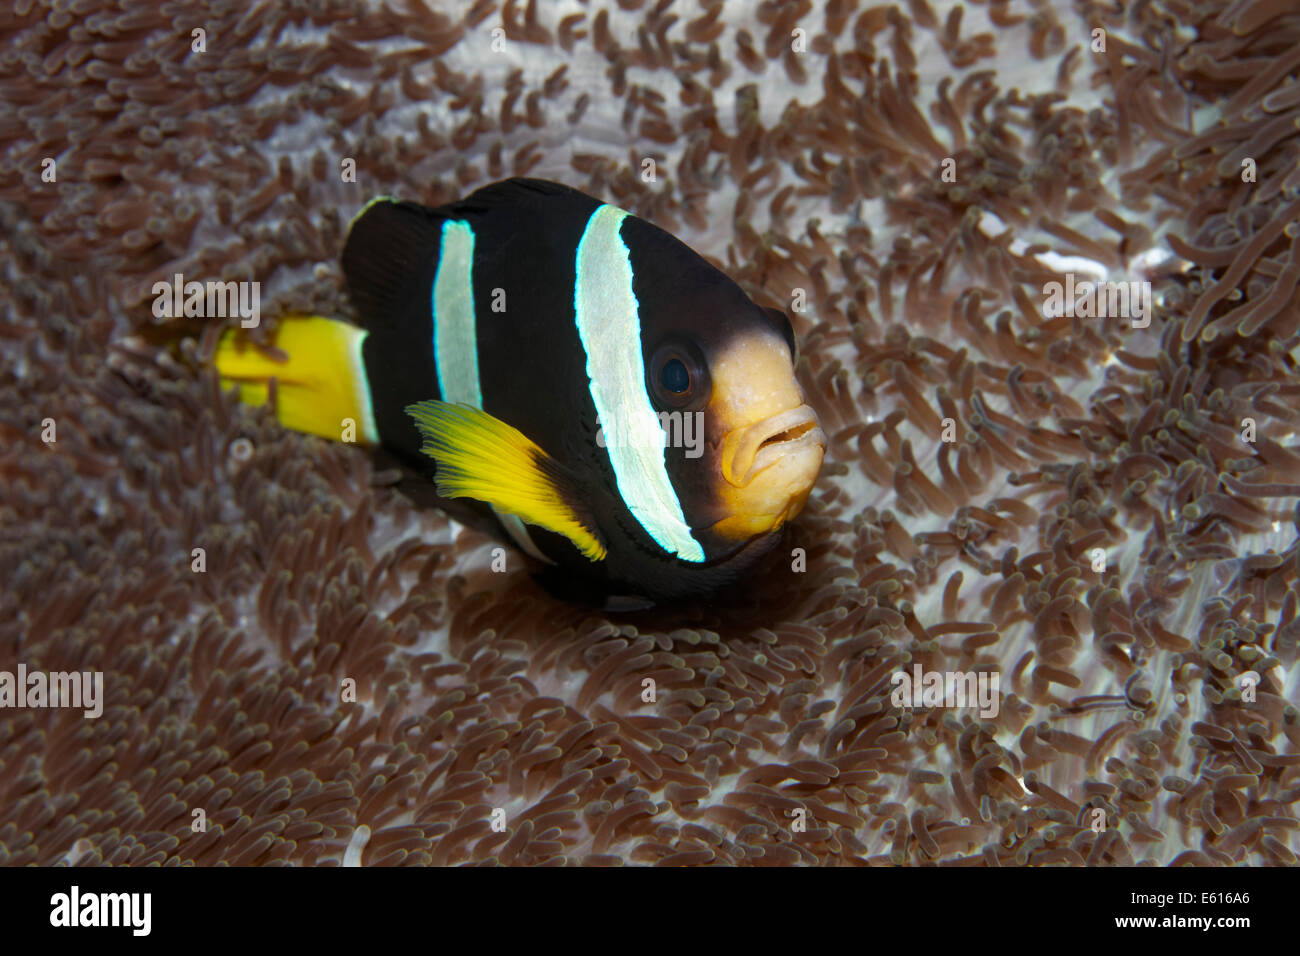 Clark's Anemonefish or Yellowtail Clownfish (Amphiprion clarkii) at a Merten's Carpet Anemone (Stichodactyla mertensii) Stock Photo